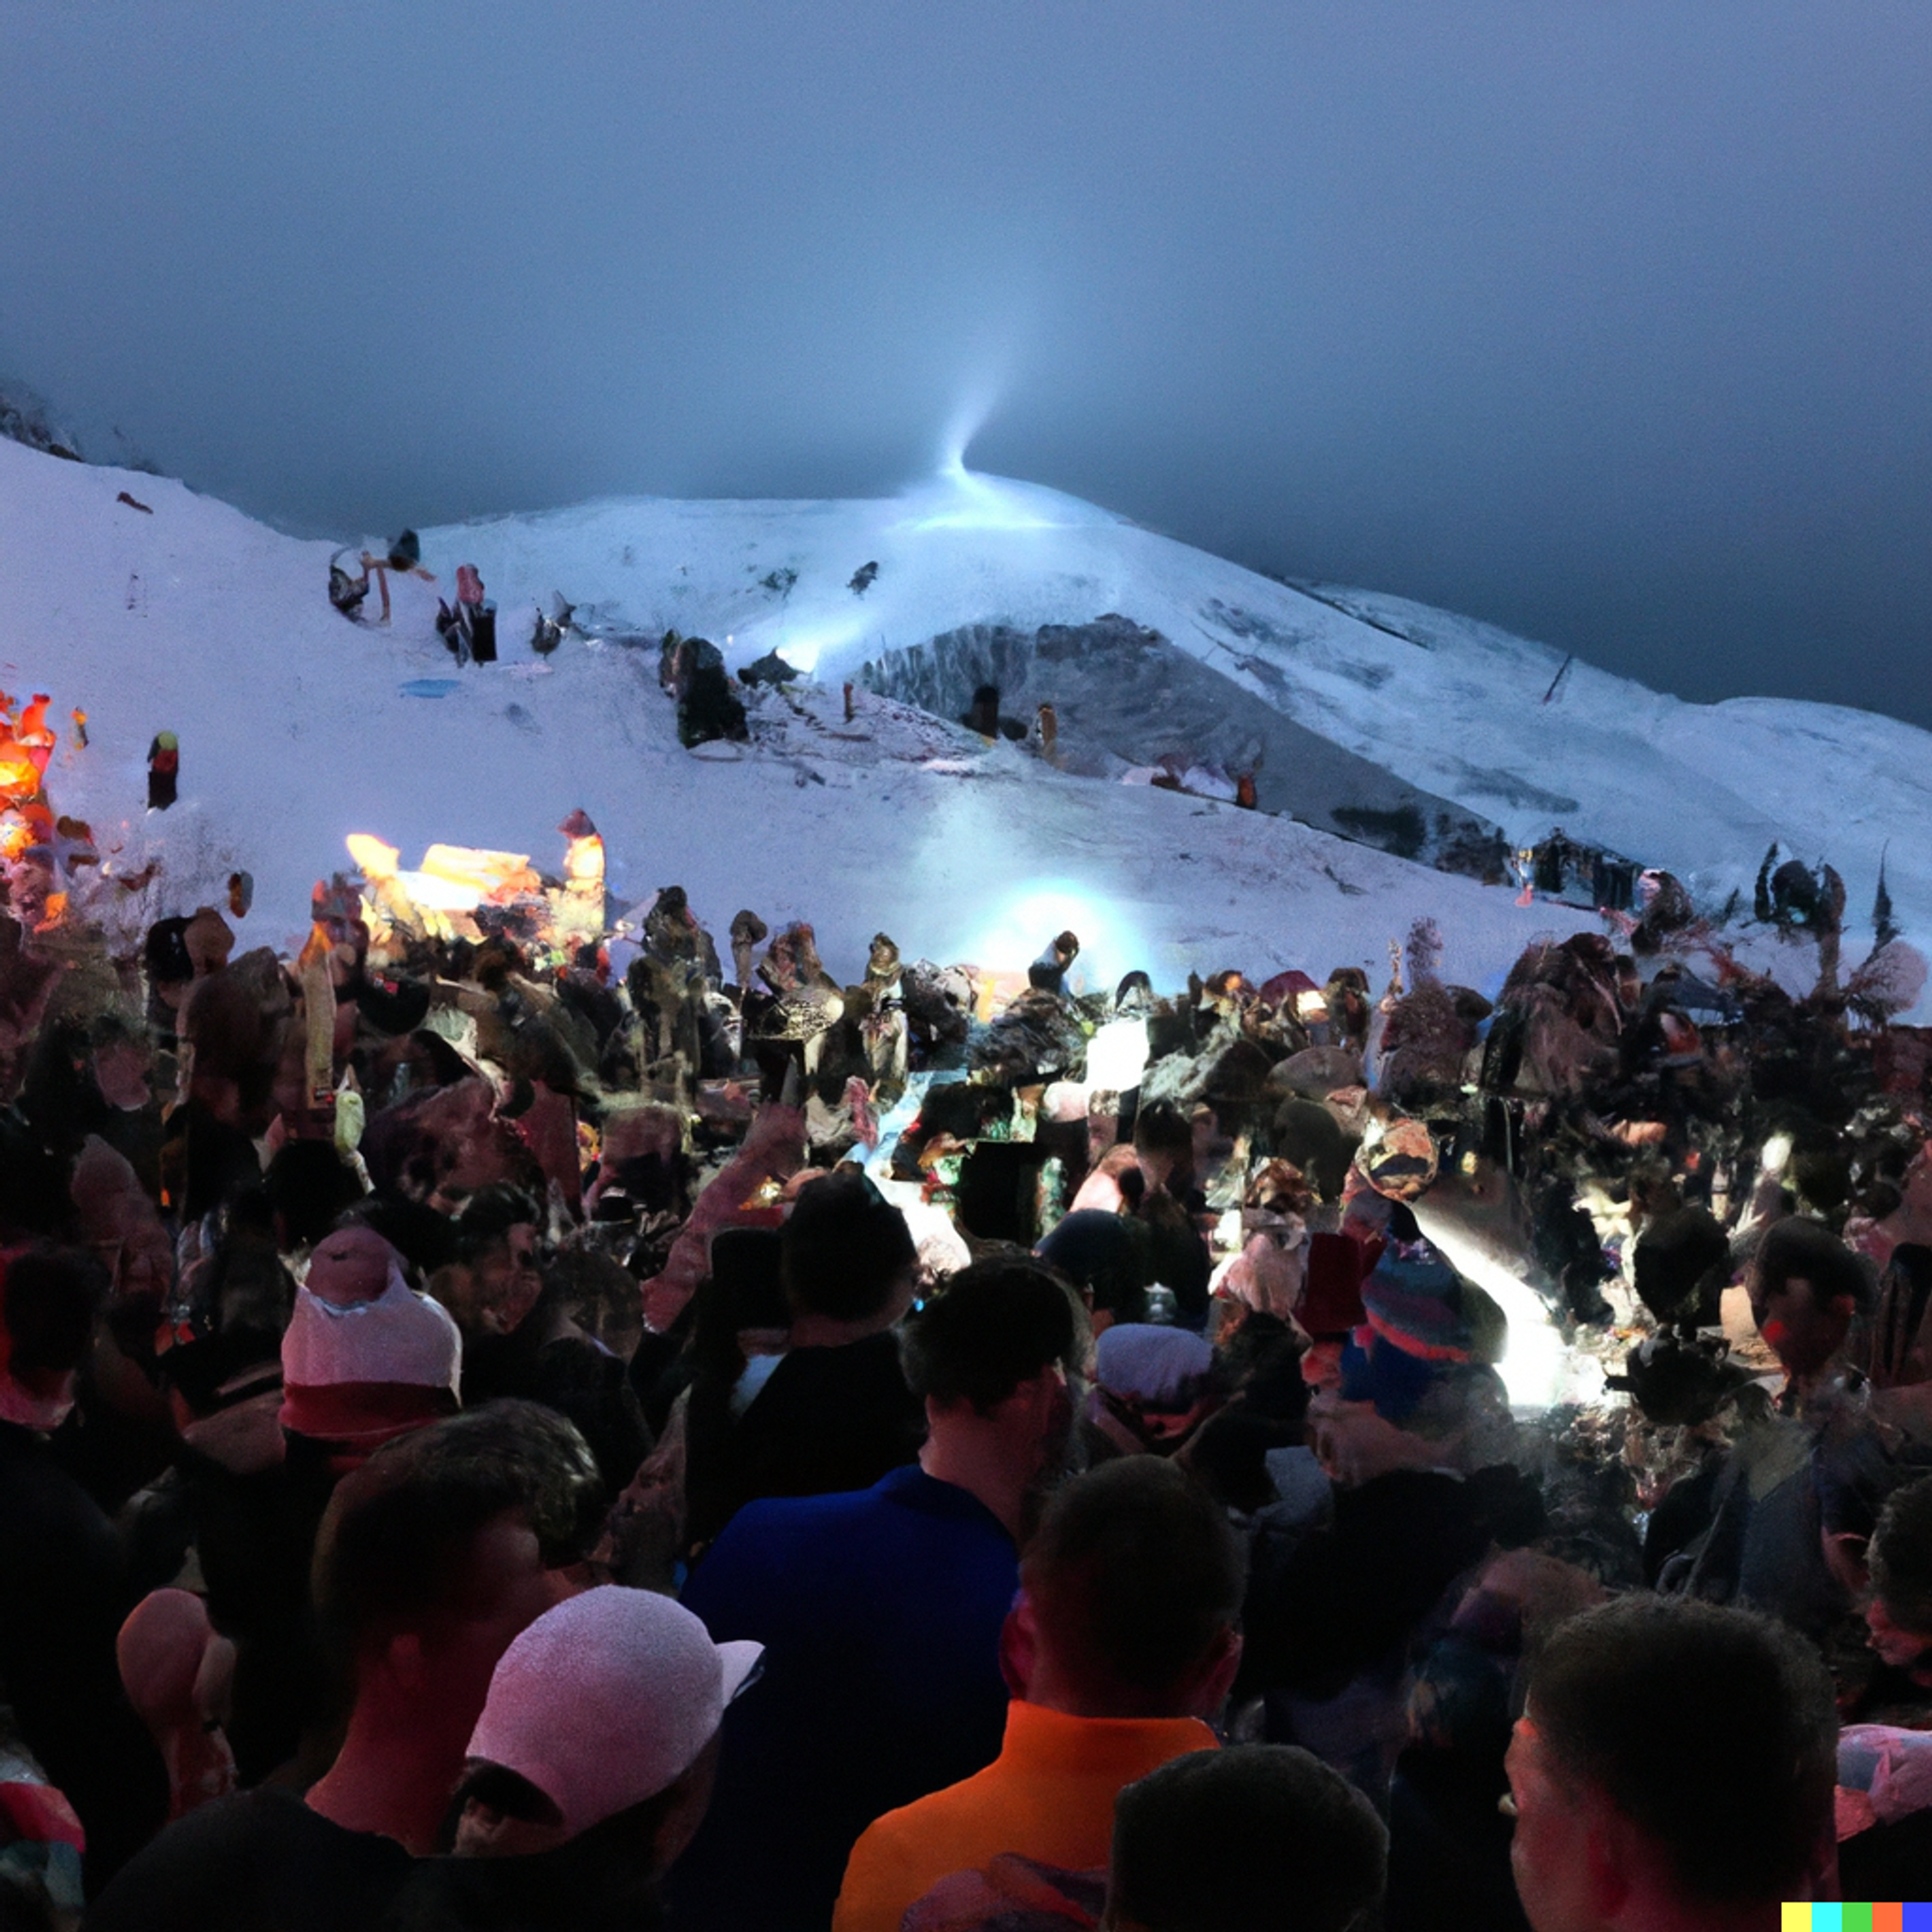 Partying, winter Adventure - Unforgettable days at Les deux alpes winter festival